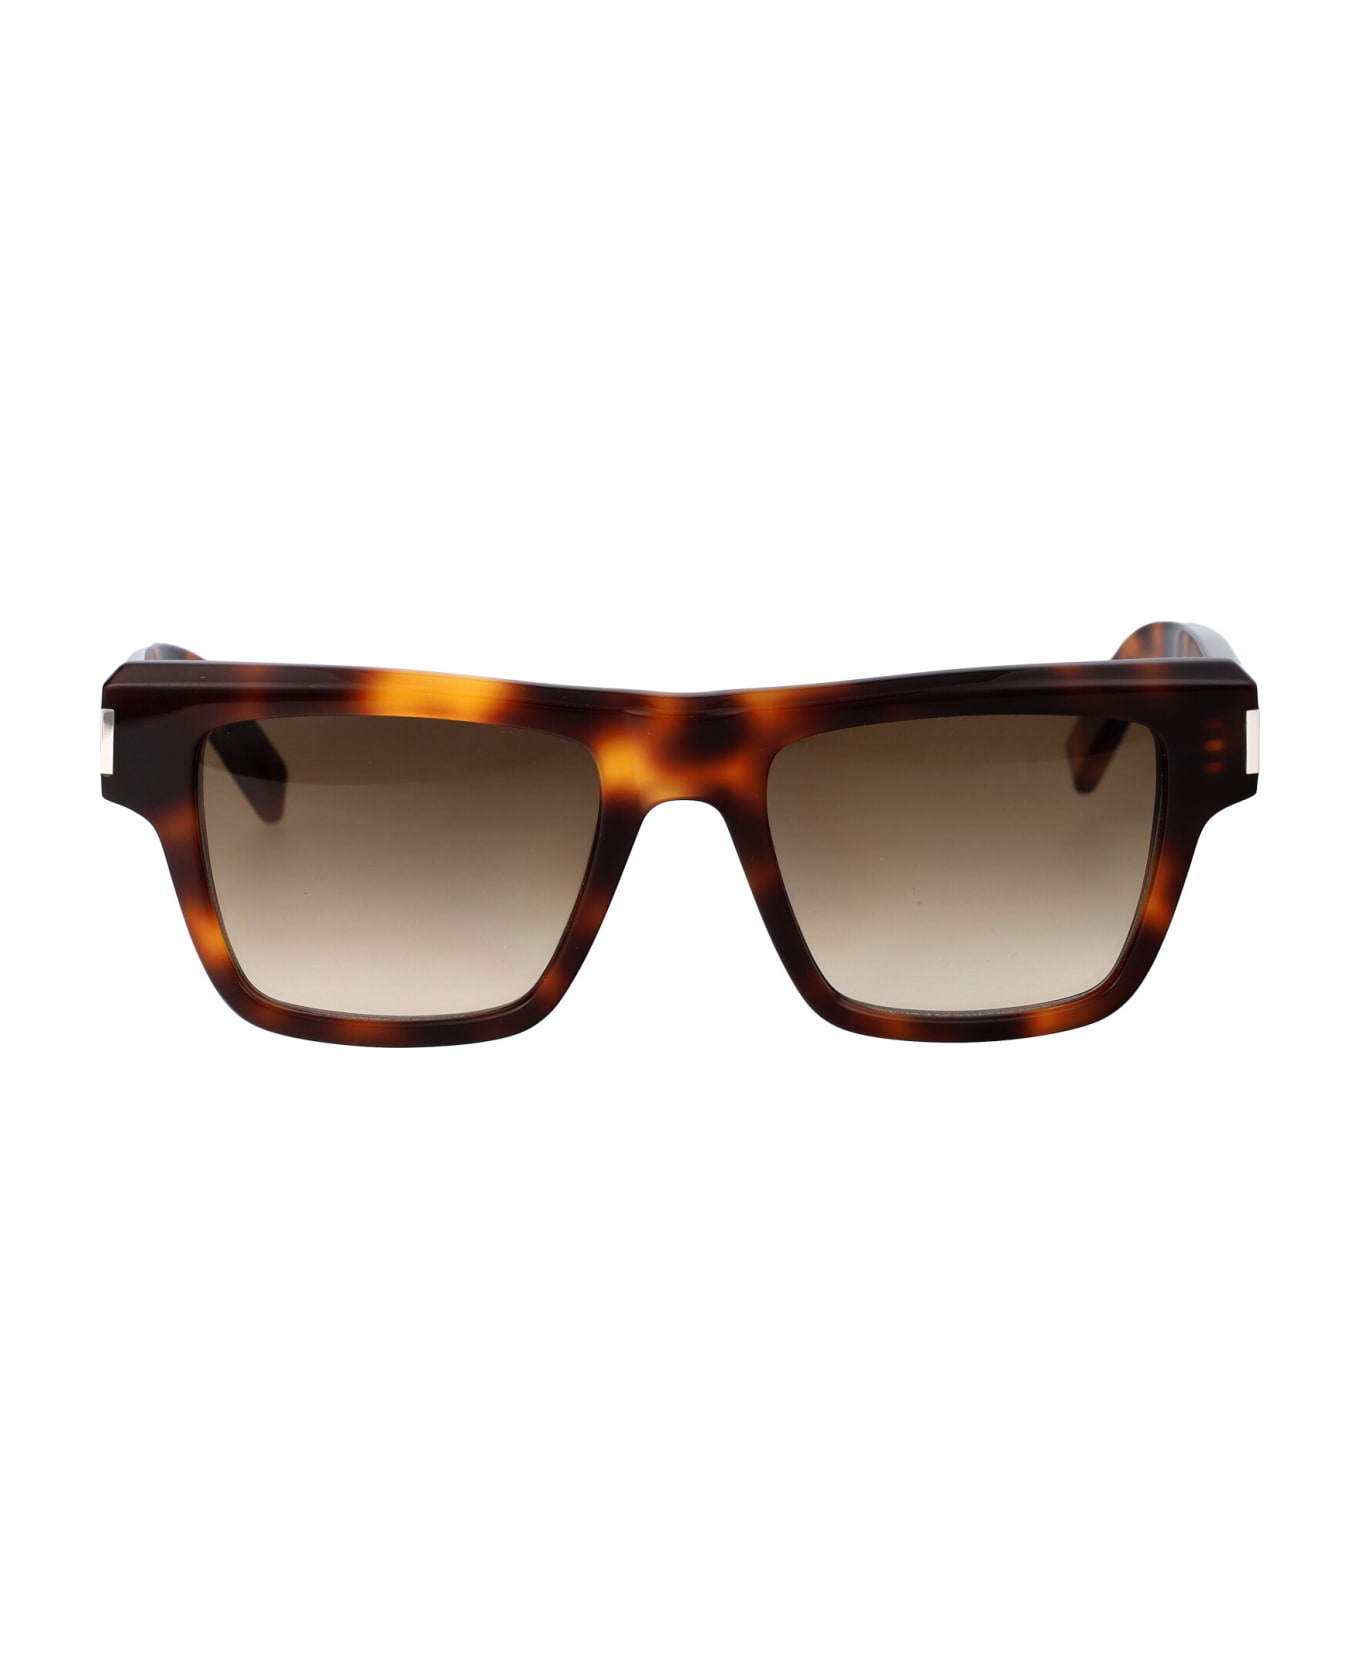 Saint Laurent Eyewear Sl 469 Sunglasses - 020 HAVANA HAVANA BROWN